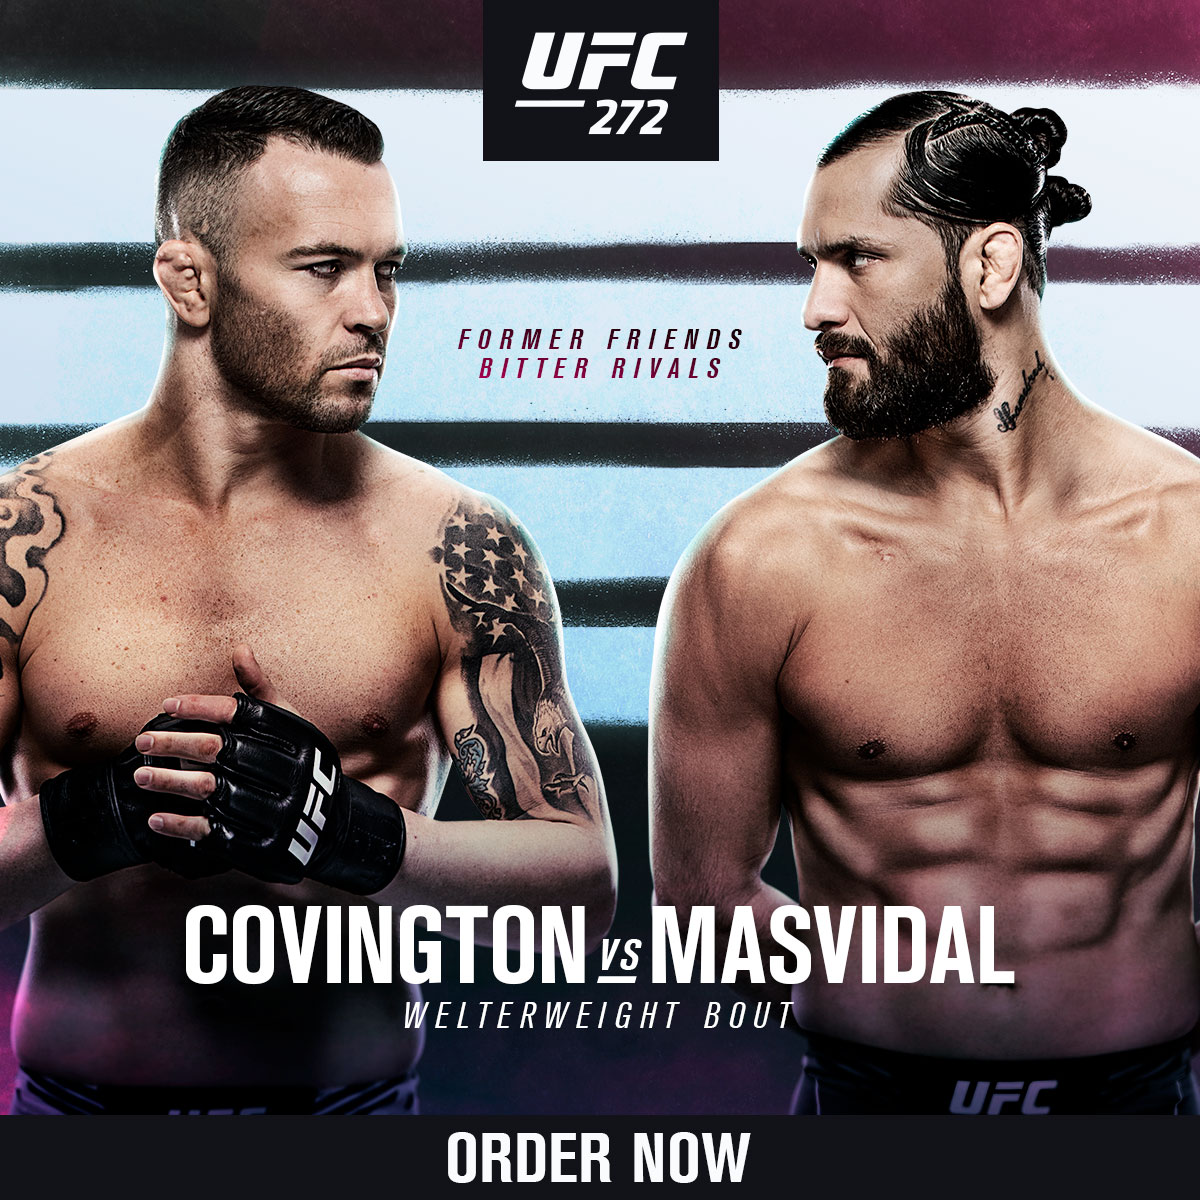 Order Now! UFC 272: Covington vs Masvidal